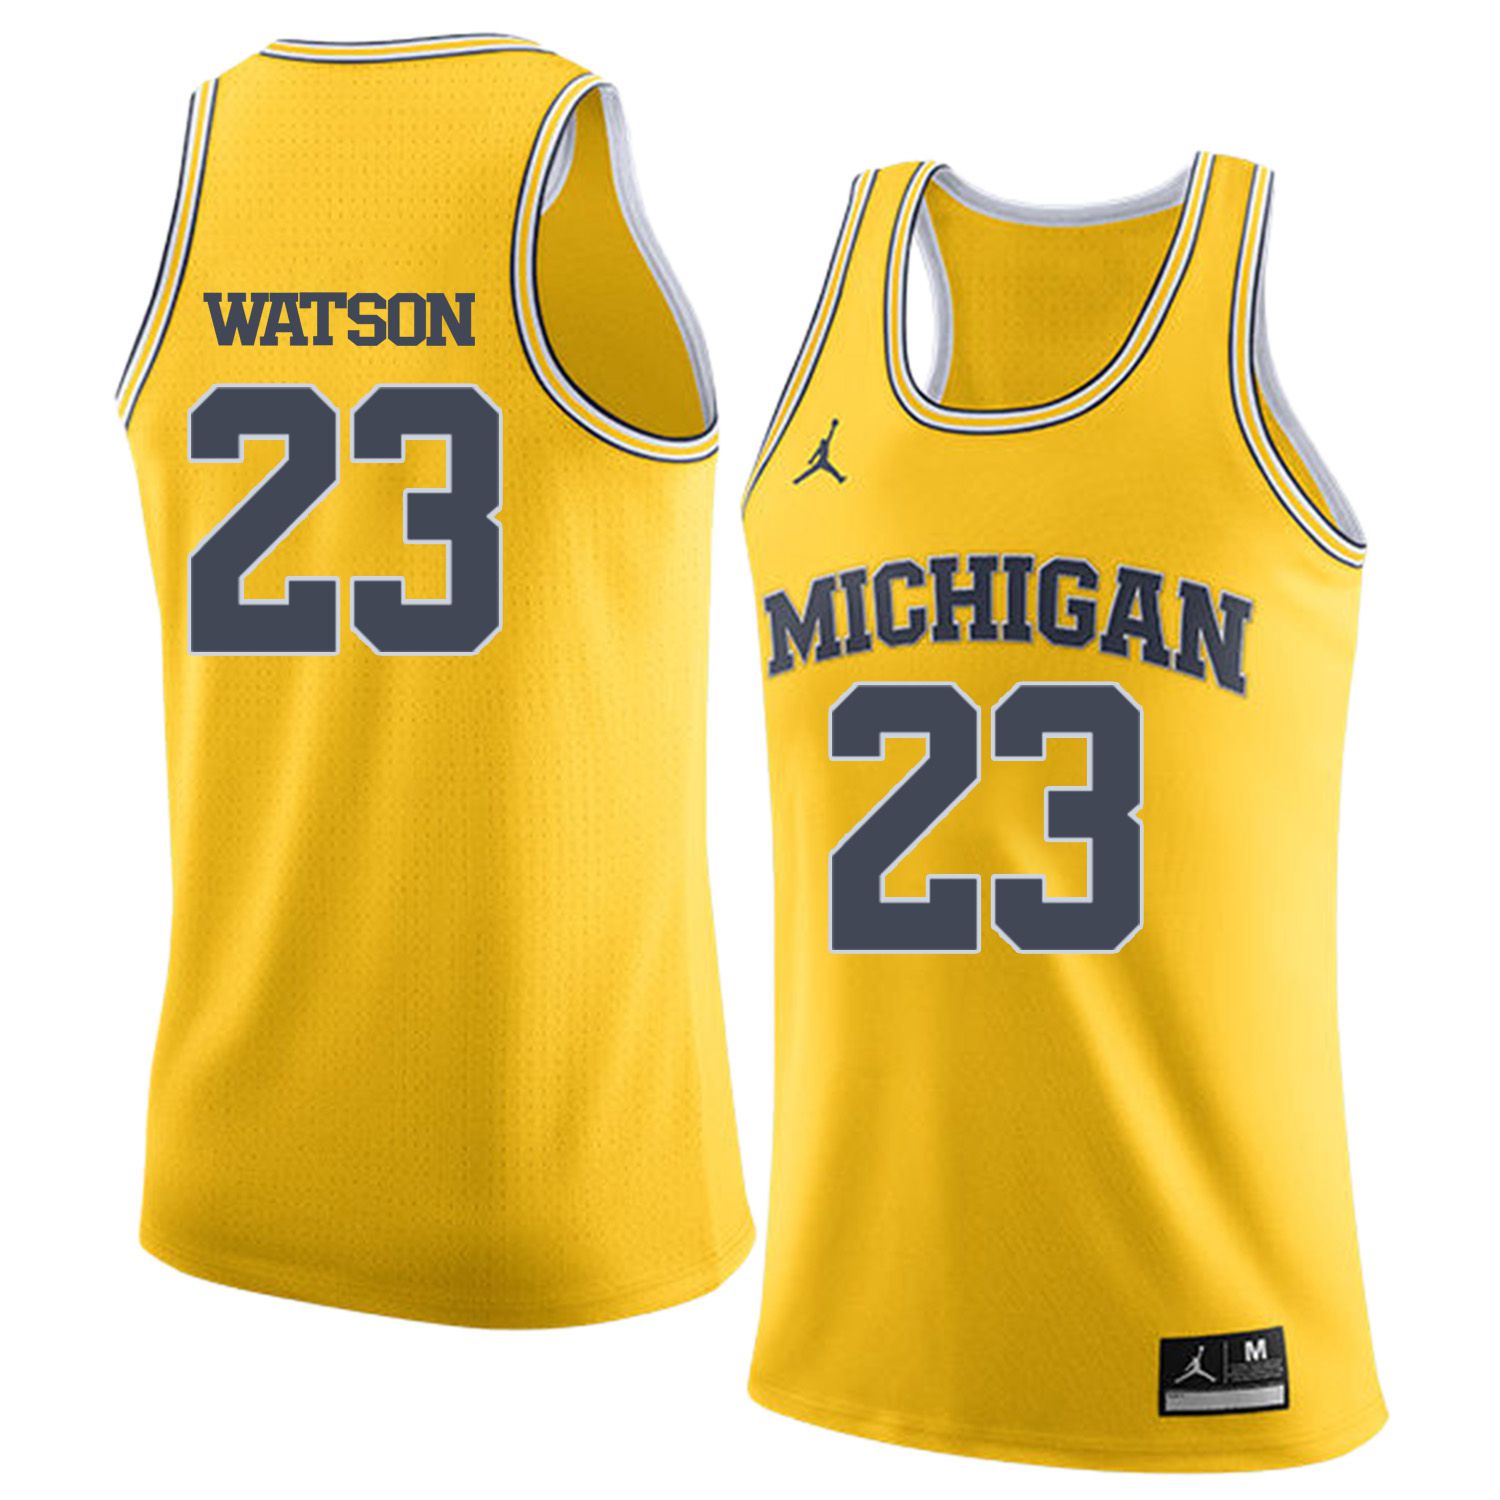 Men Jordan University of Michigan Basketball Yellow 23 Watson Customized NCAA Jerseys